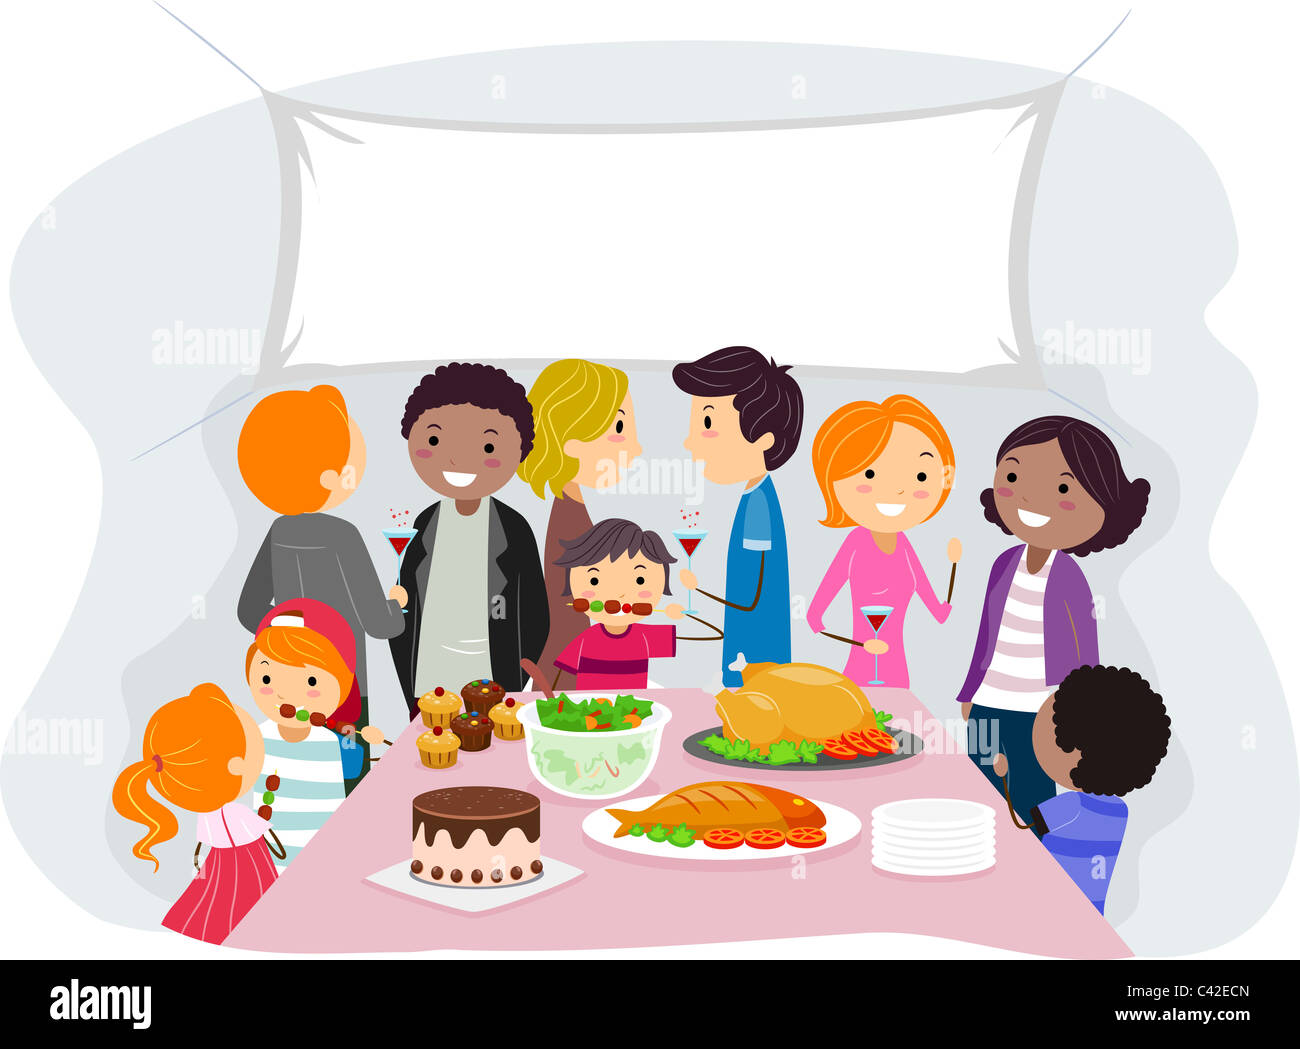 Illustration of a Family Gathering Stock Photo